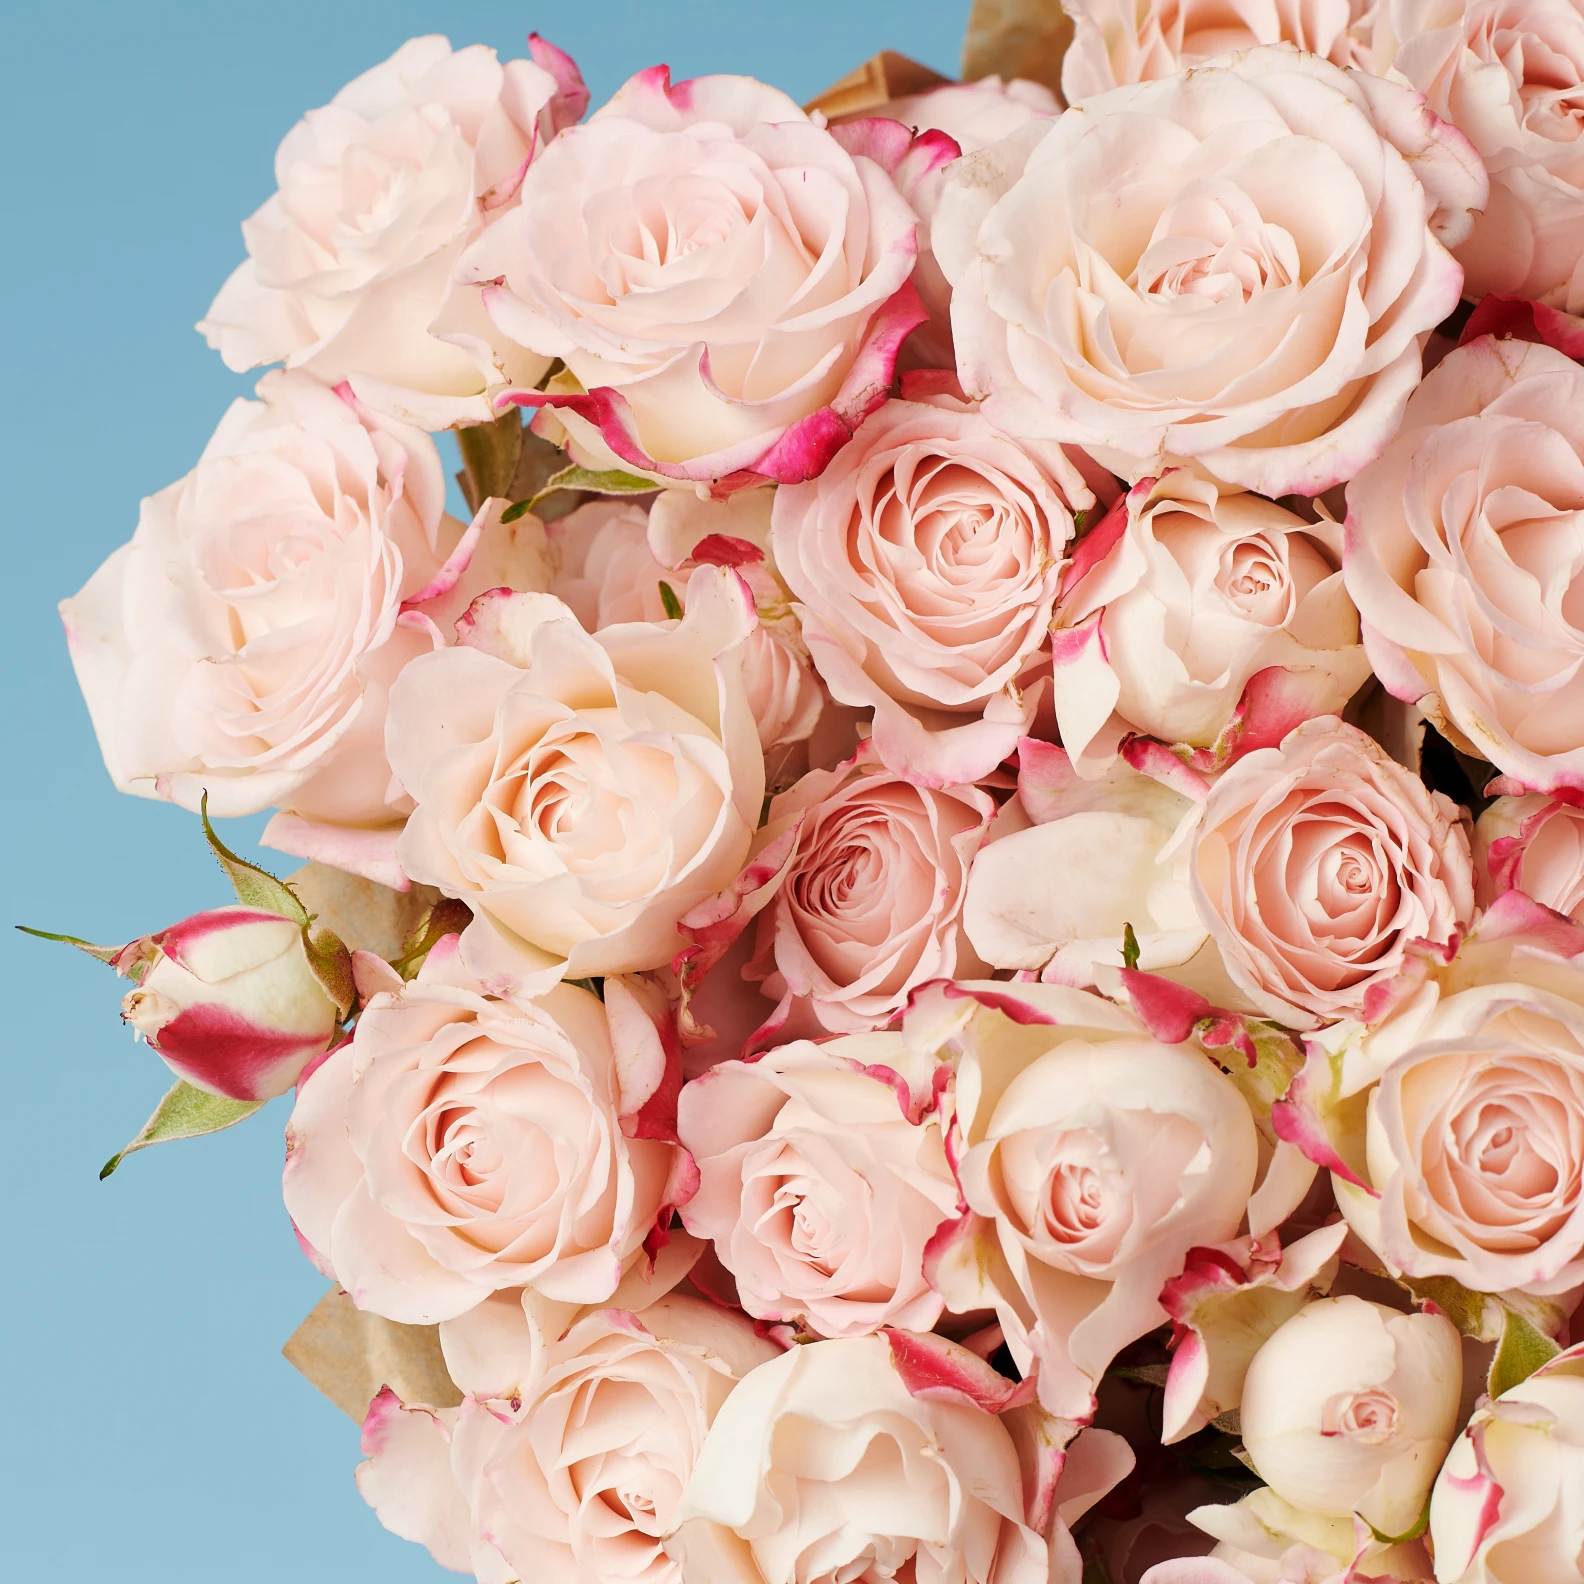 10 Spray Pink Roses - image №2